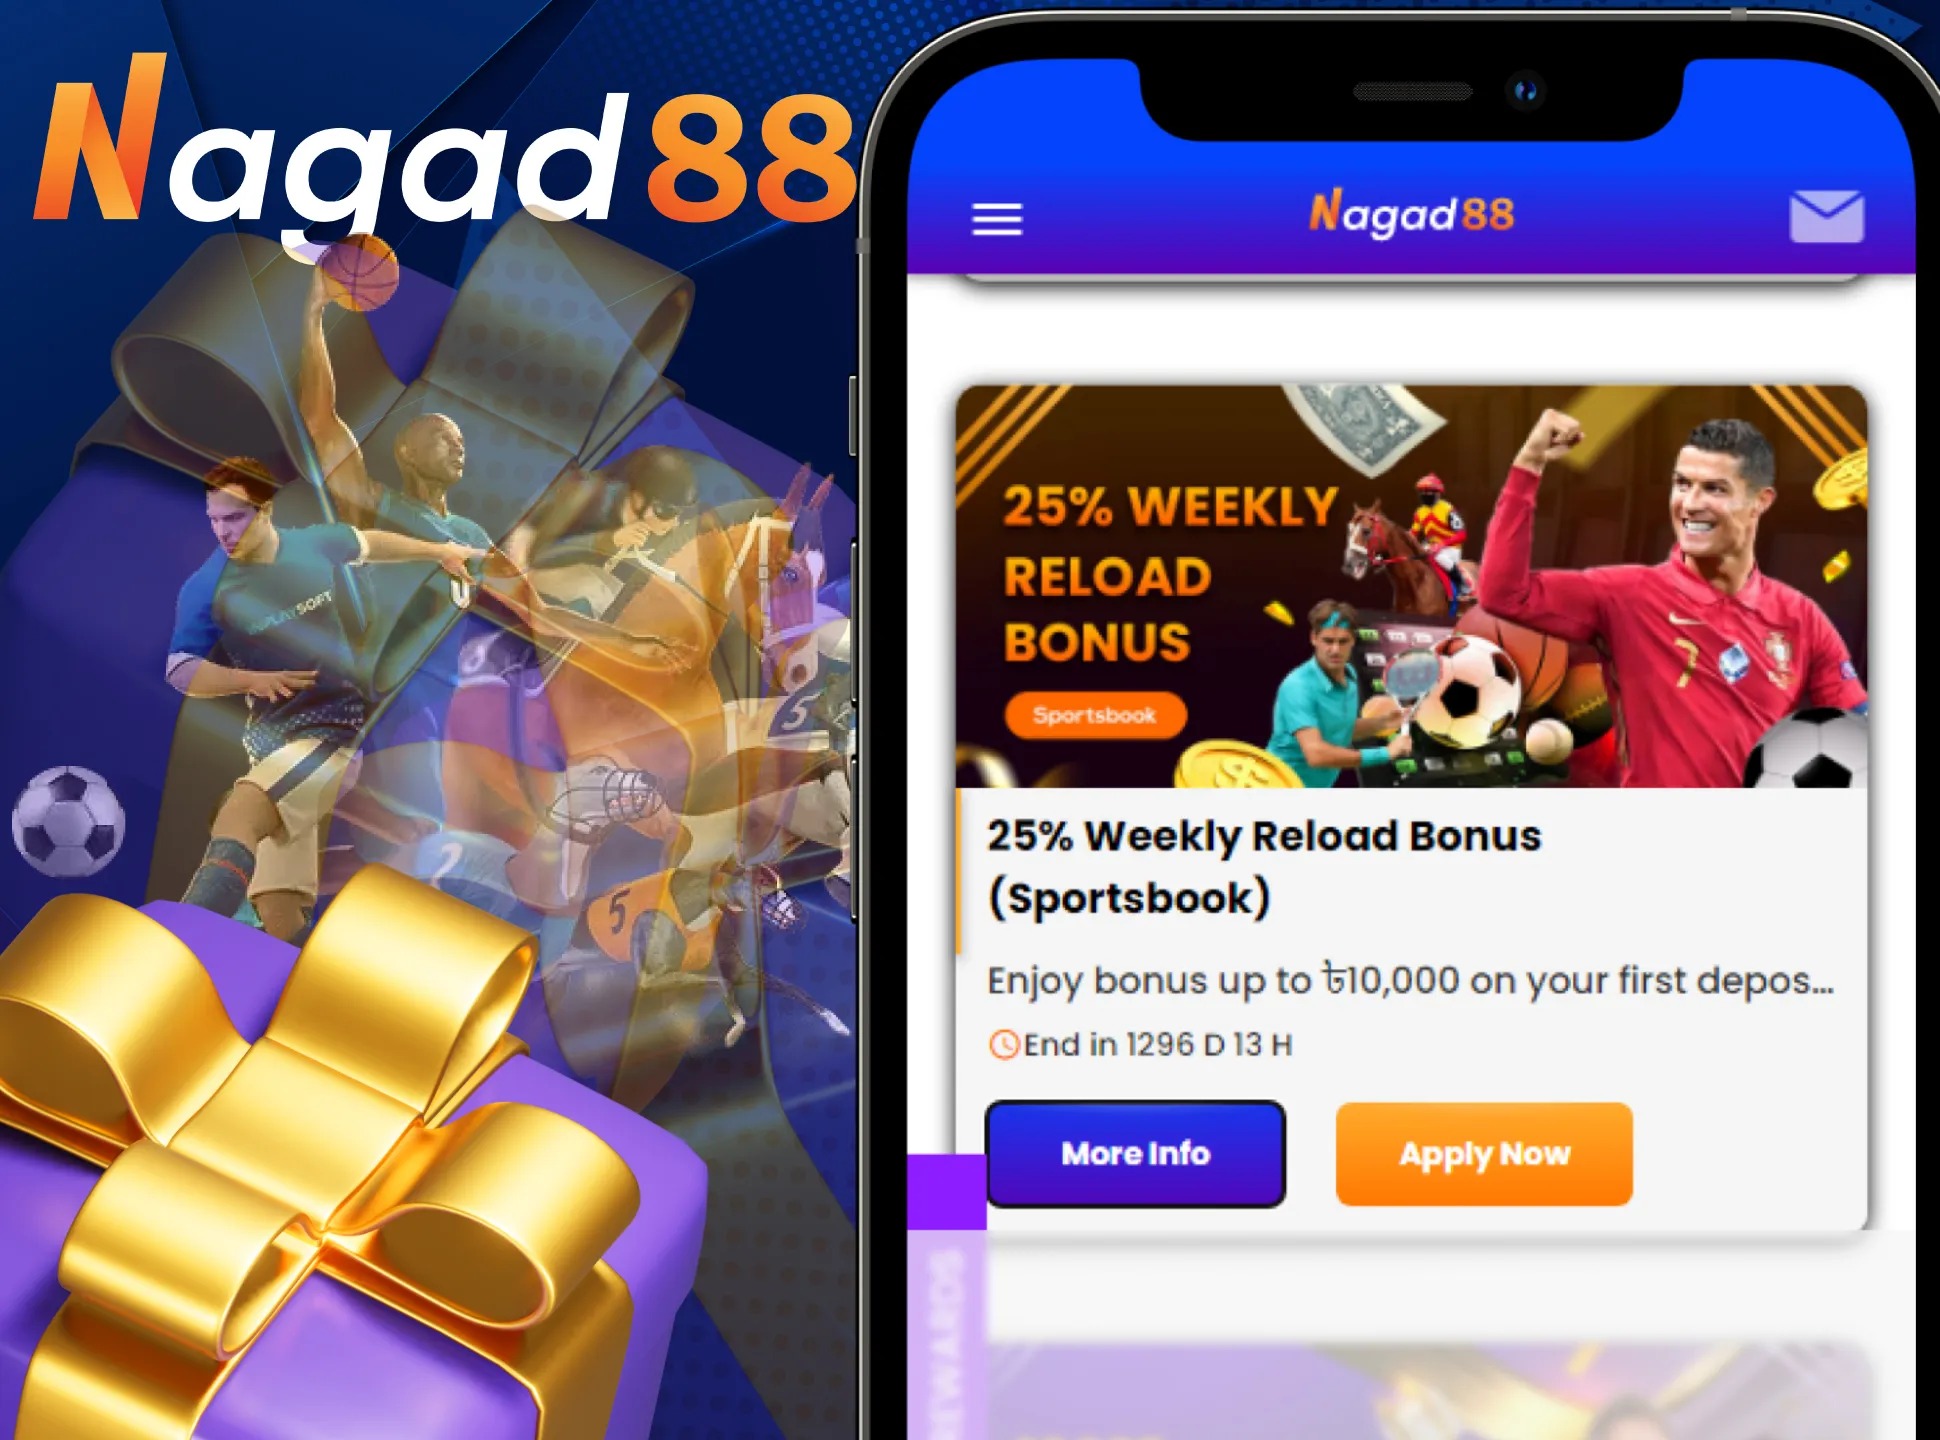 The Nagad88 app offers a lucrative weekly reload sport bonus.